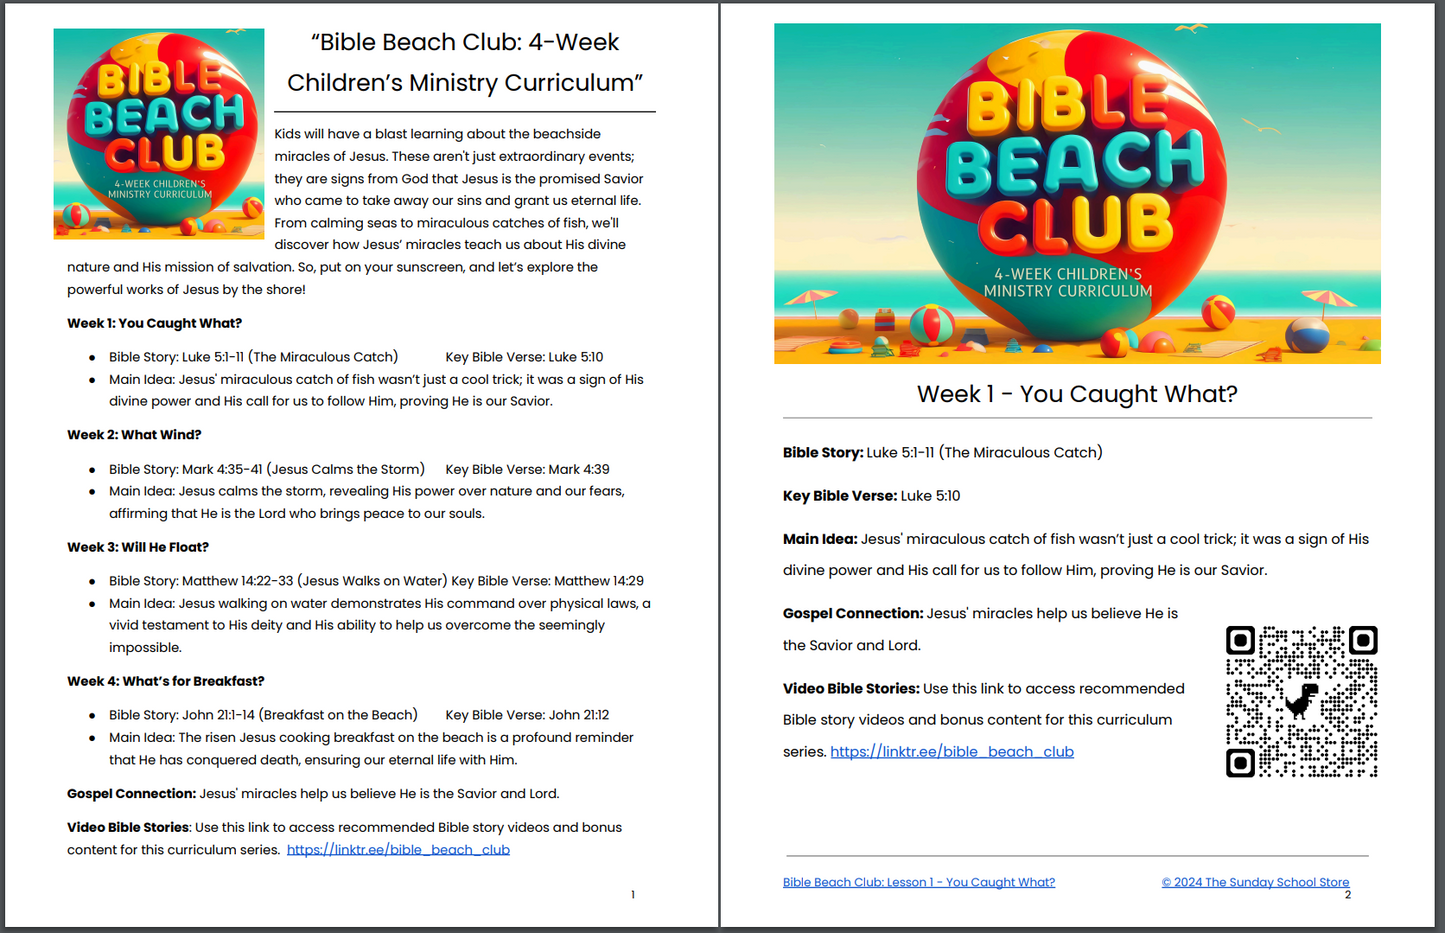 Bible Beach Club: 4-Week Children’s Ministry Curriculum